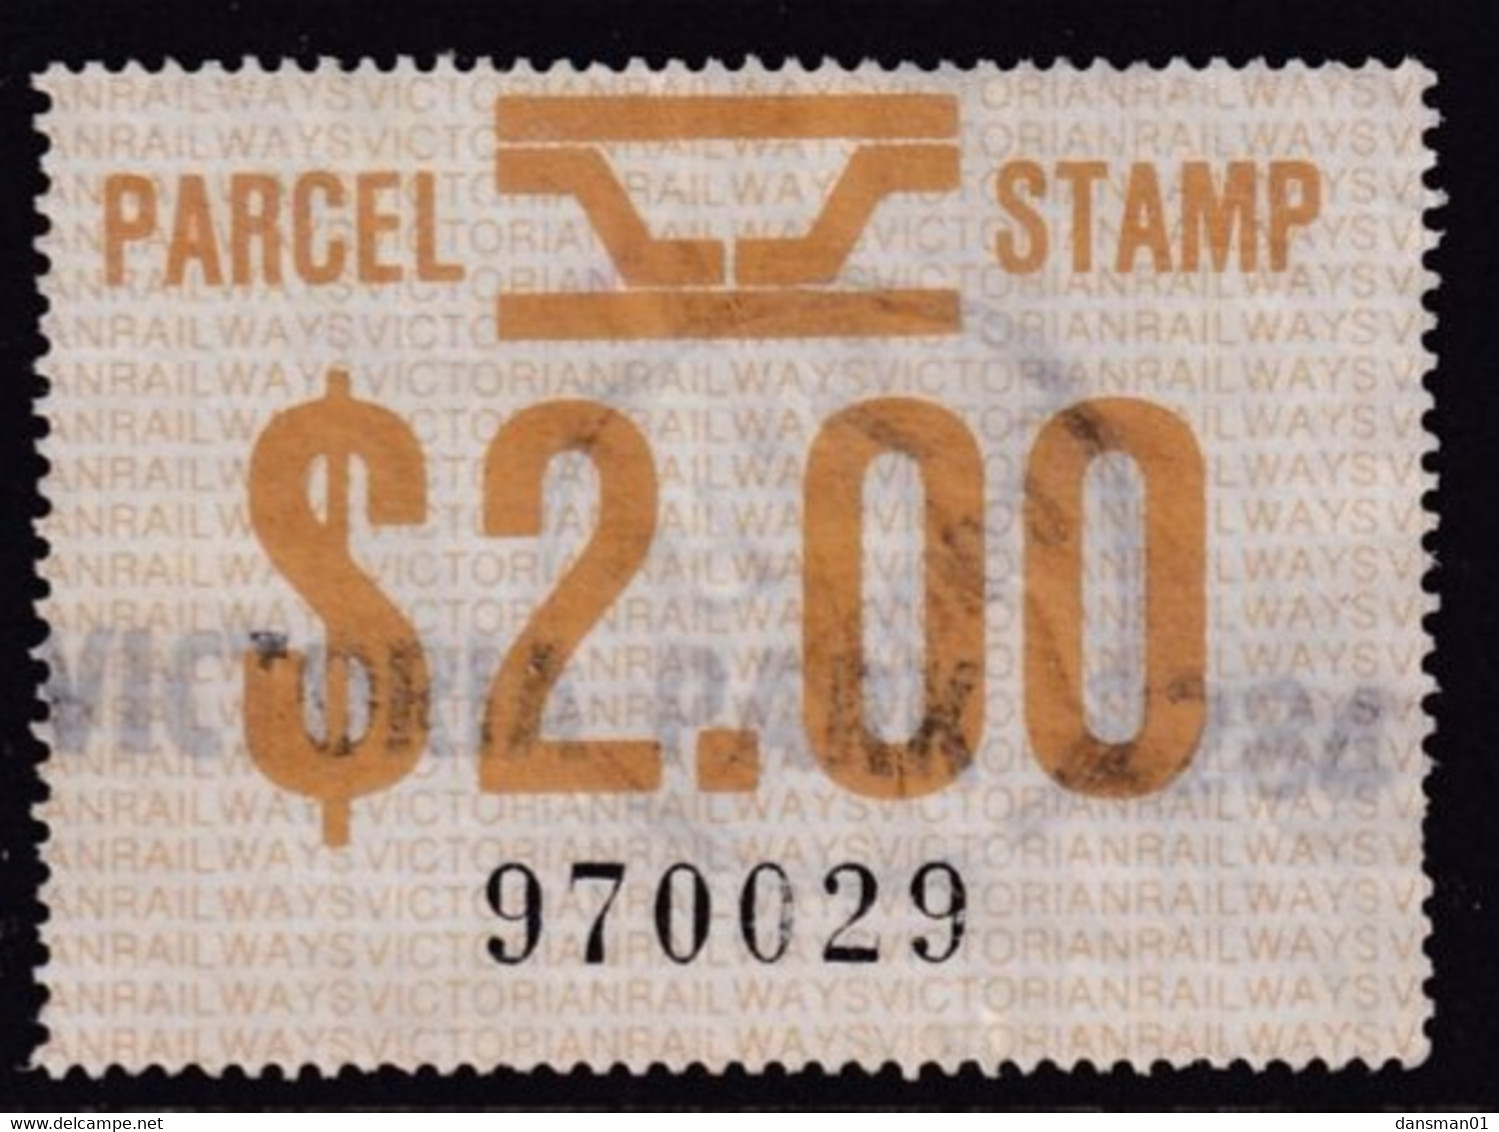 Victoria 1981 Railway Parcel Stamp $2 Used - Errors, Freaks & Oddities (EFO)